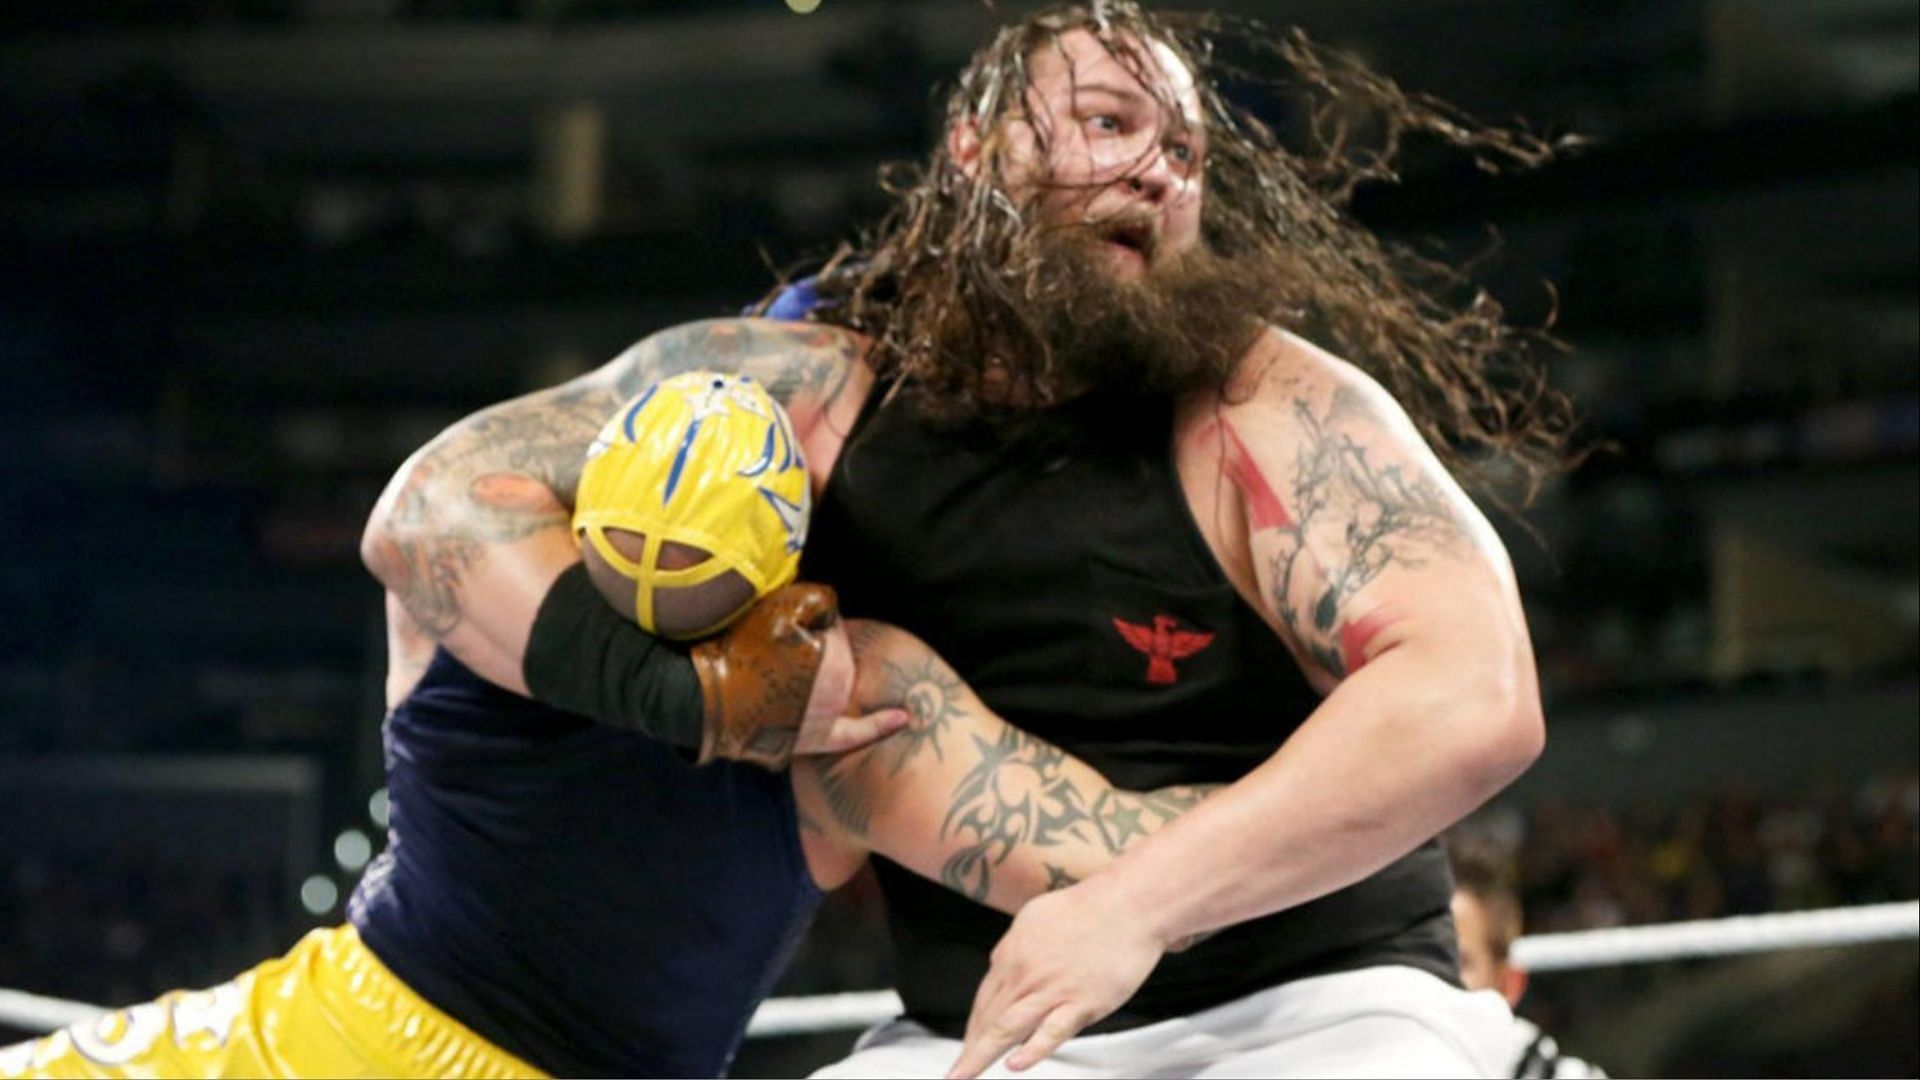 Bray Wyatt hits Rey Mysterio with the Sister Abigail.